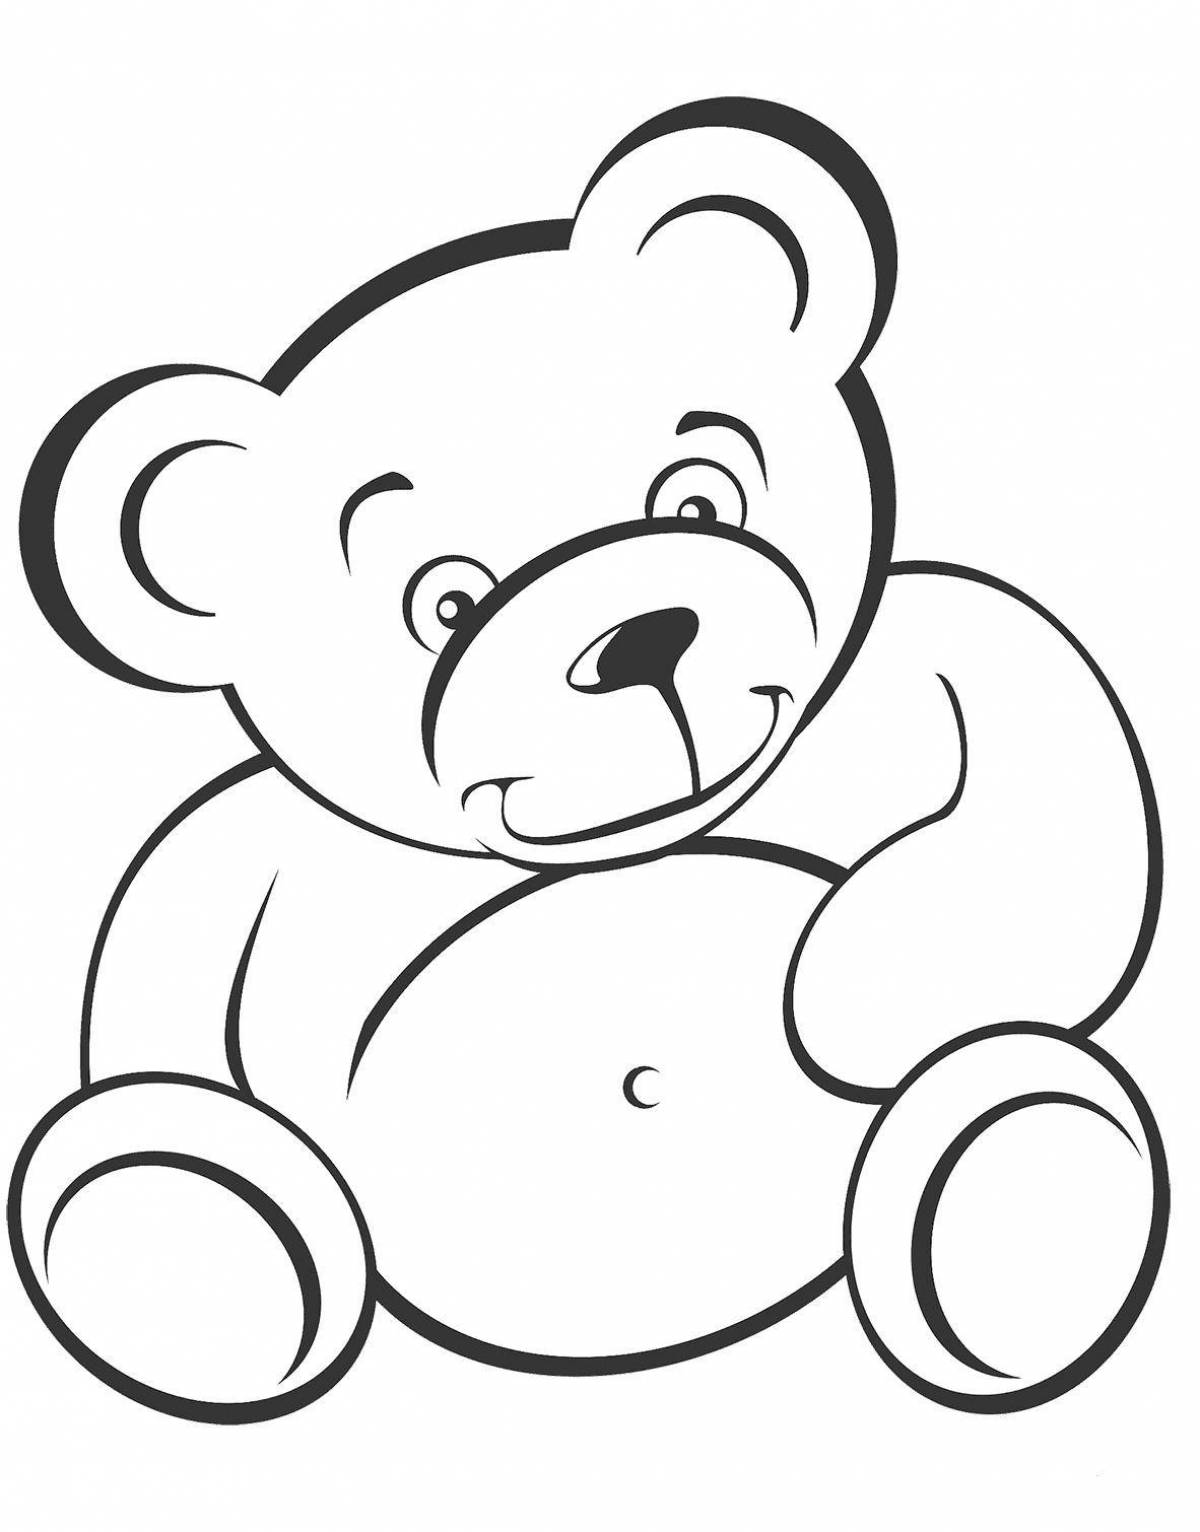 Креативная раскраска медведя для детей 6-7 лет